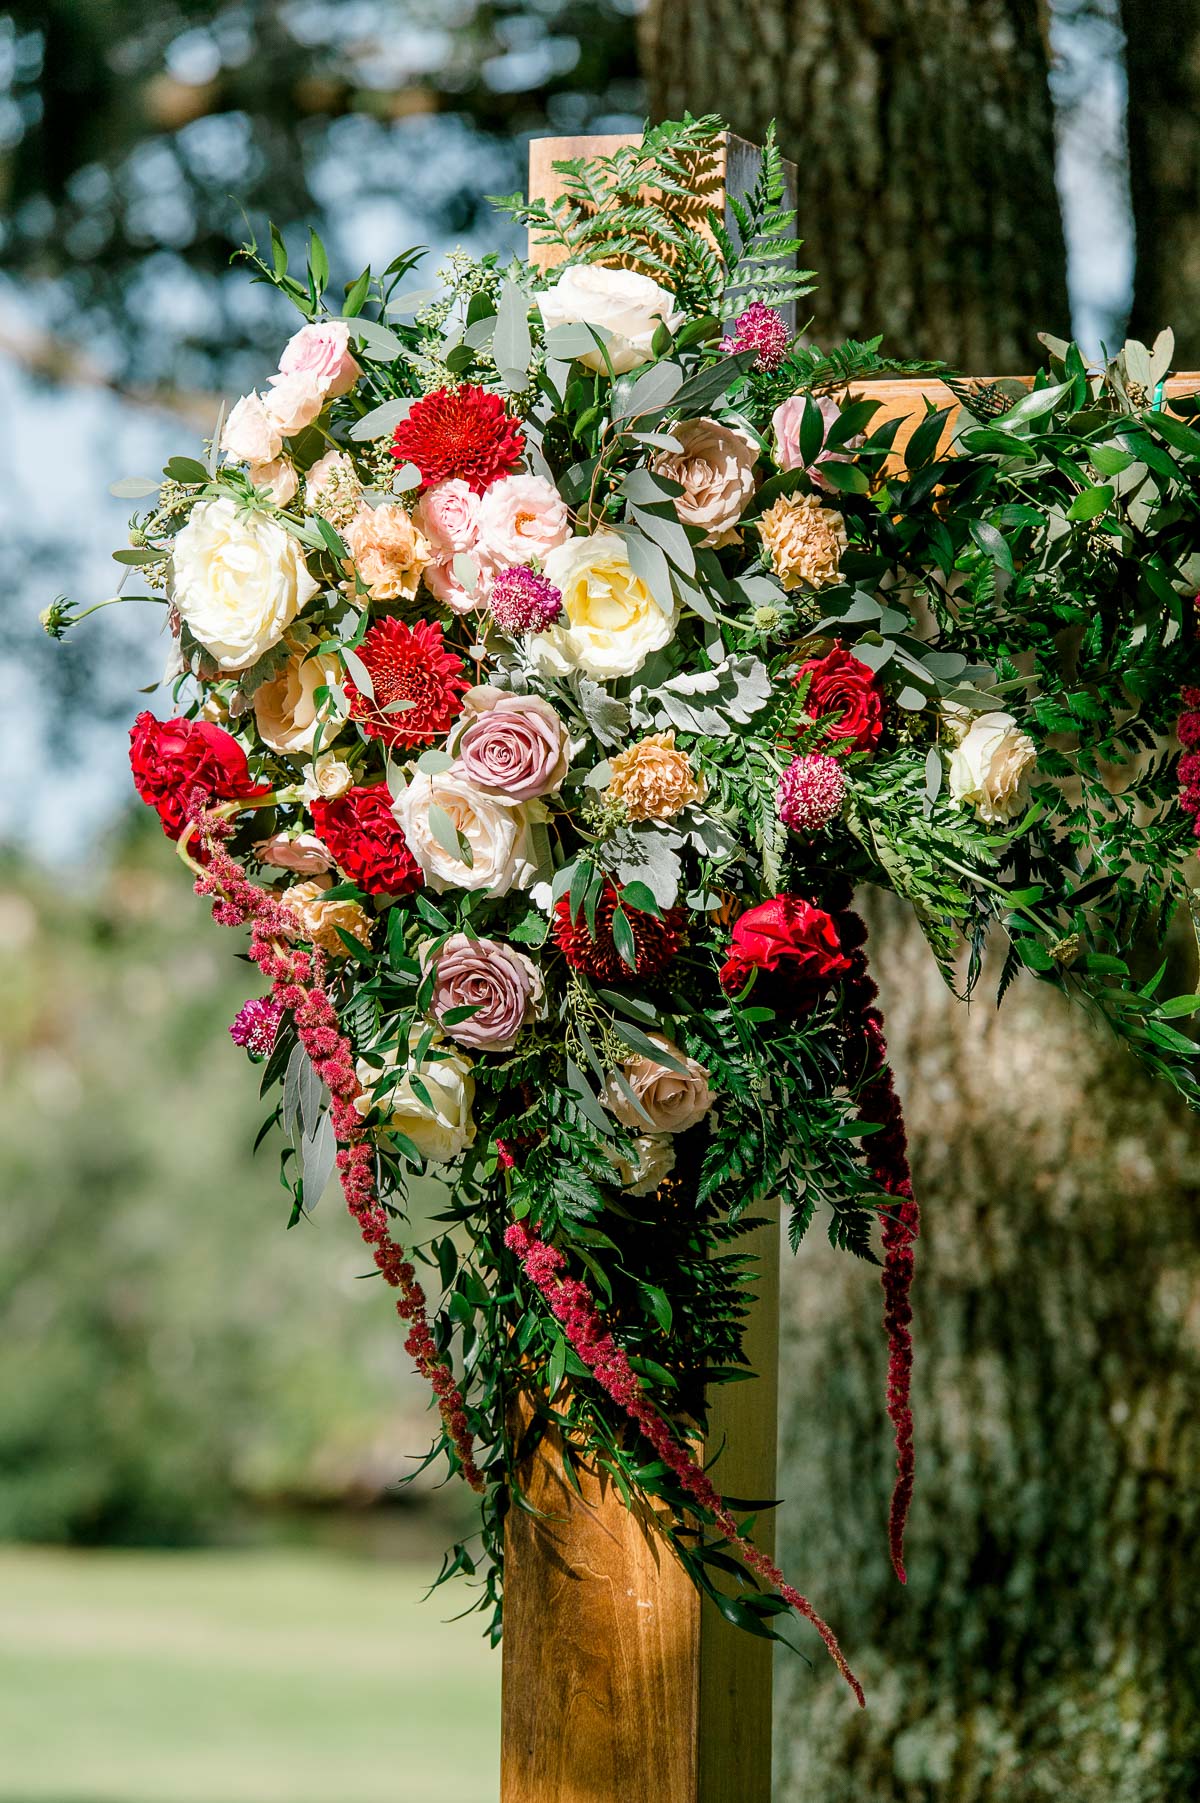 Floral decor at outdoor wedding